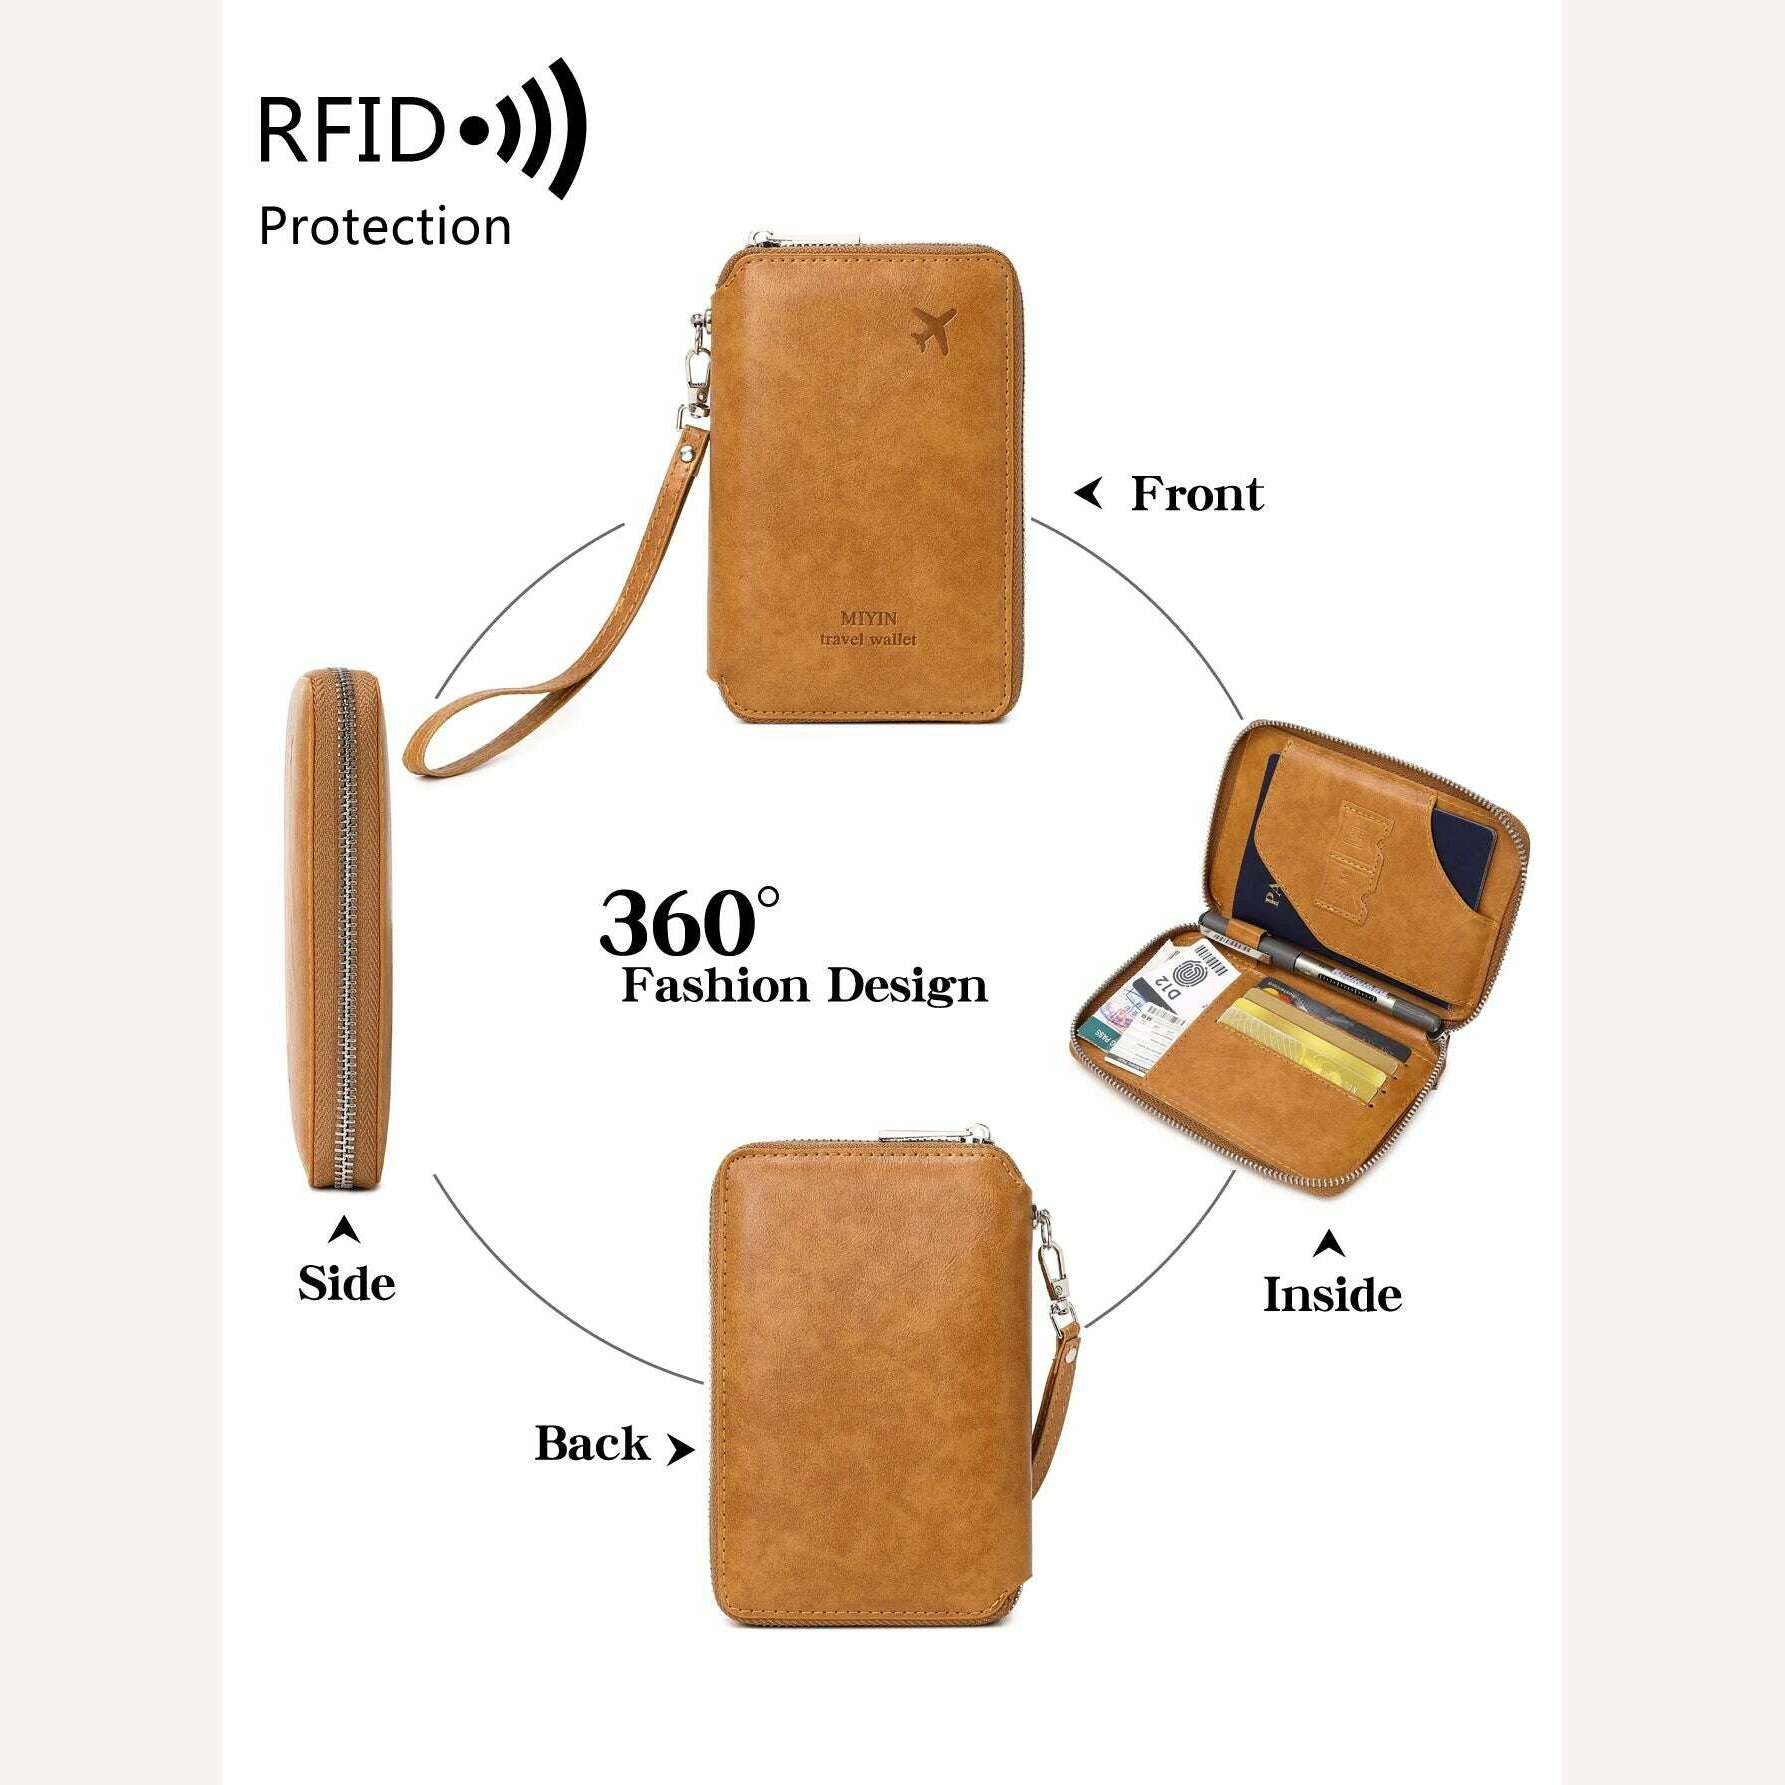 KIMLUD, Minimalist and fashionable RFID passport holder multifunctional PU leather travel accessory passport holder wallet holder unisex, KIMLUD Womens Clothes